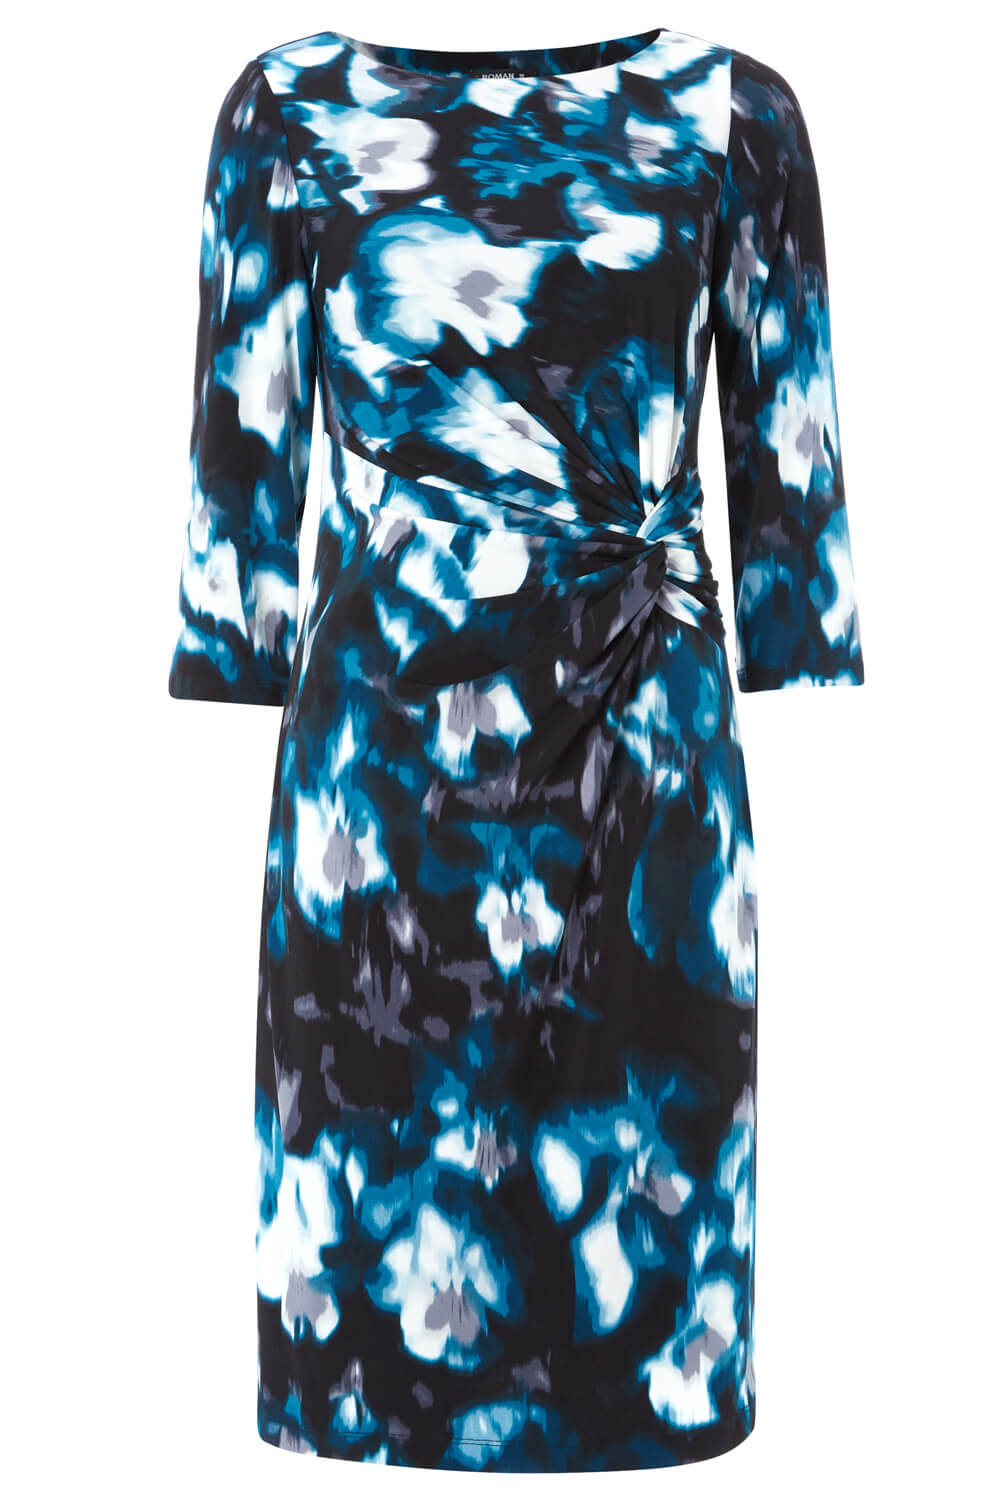 Abstract Floral Twist Waist Dress in Petrol Blue - Roman Originals UK